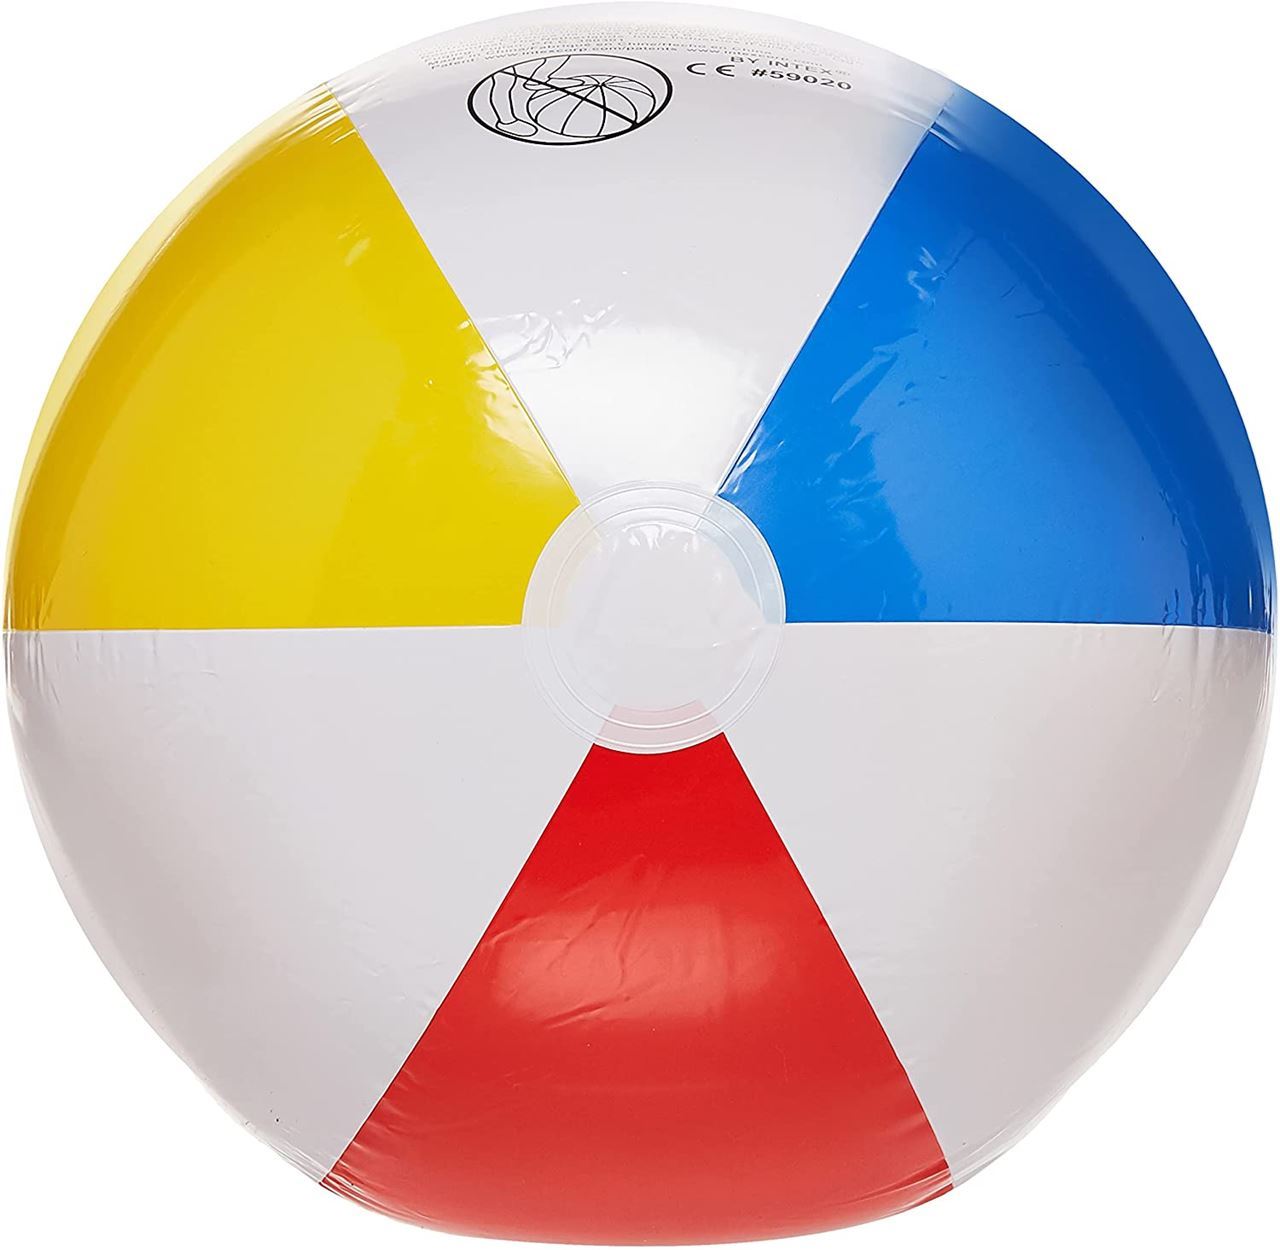 Glossy panel ball for kids +3 Intex 59030